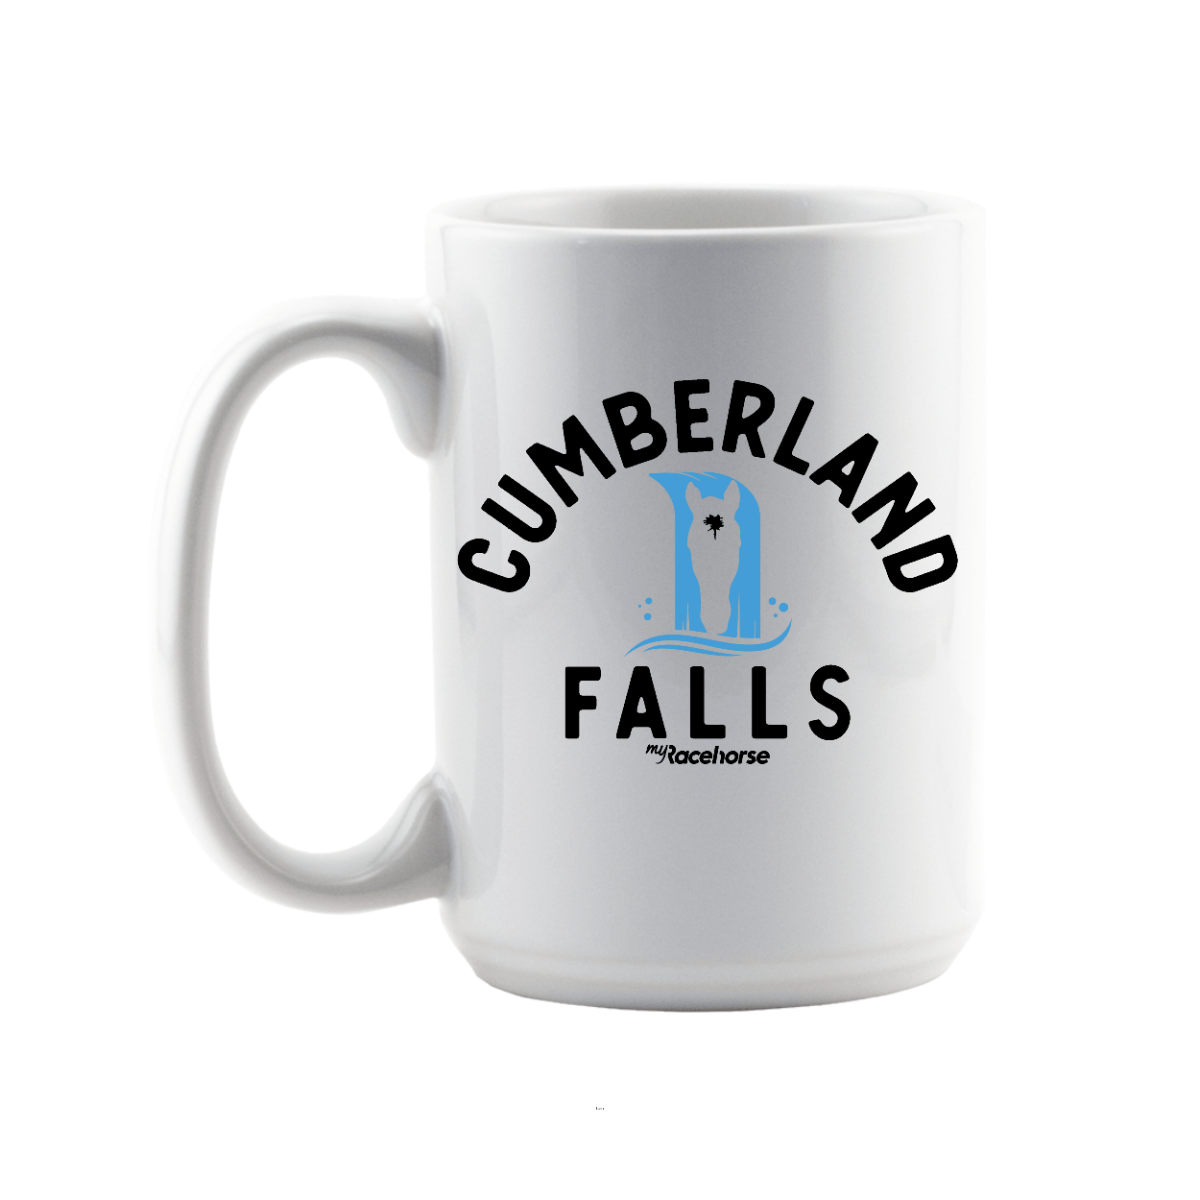 15 oz Cumberland Falls Coffee Cup